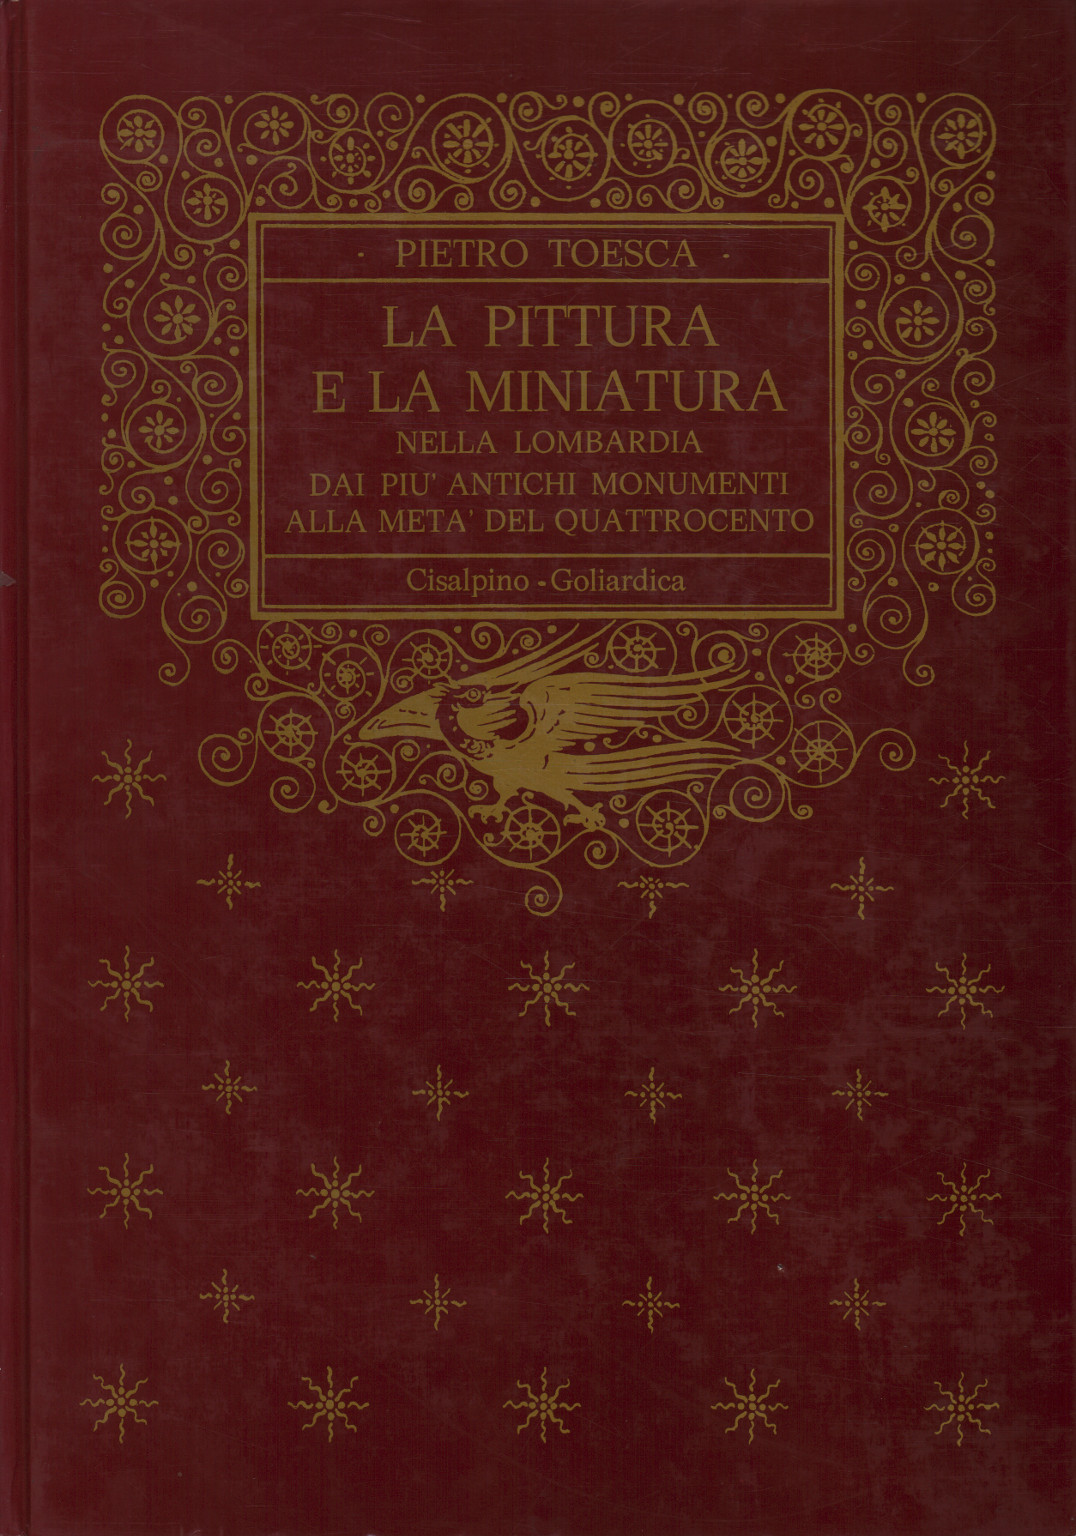 Malerei und Miniatur in der Lombardei, Pietro Toesca